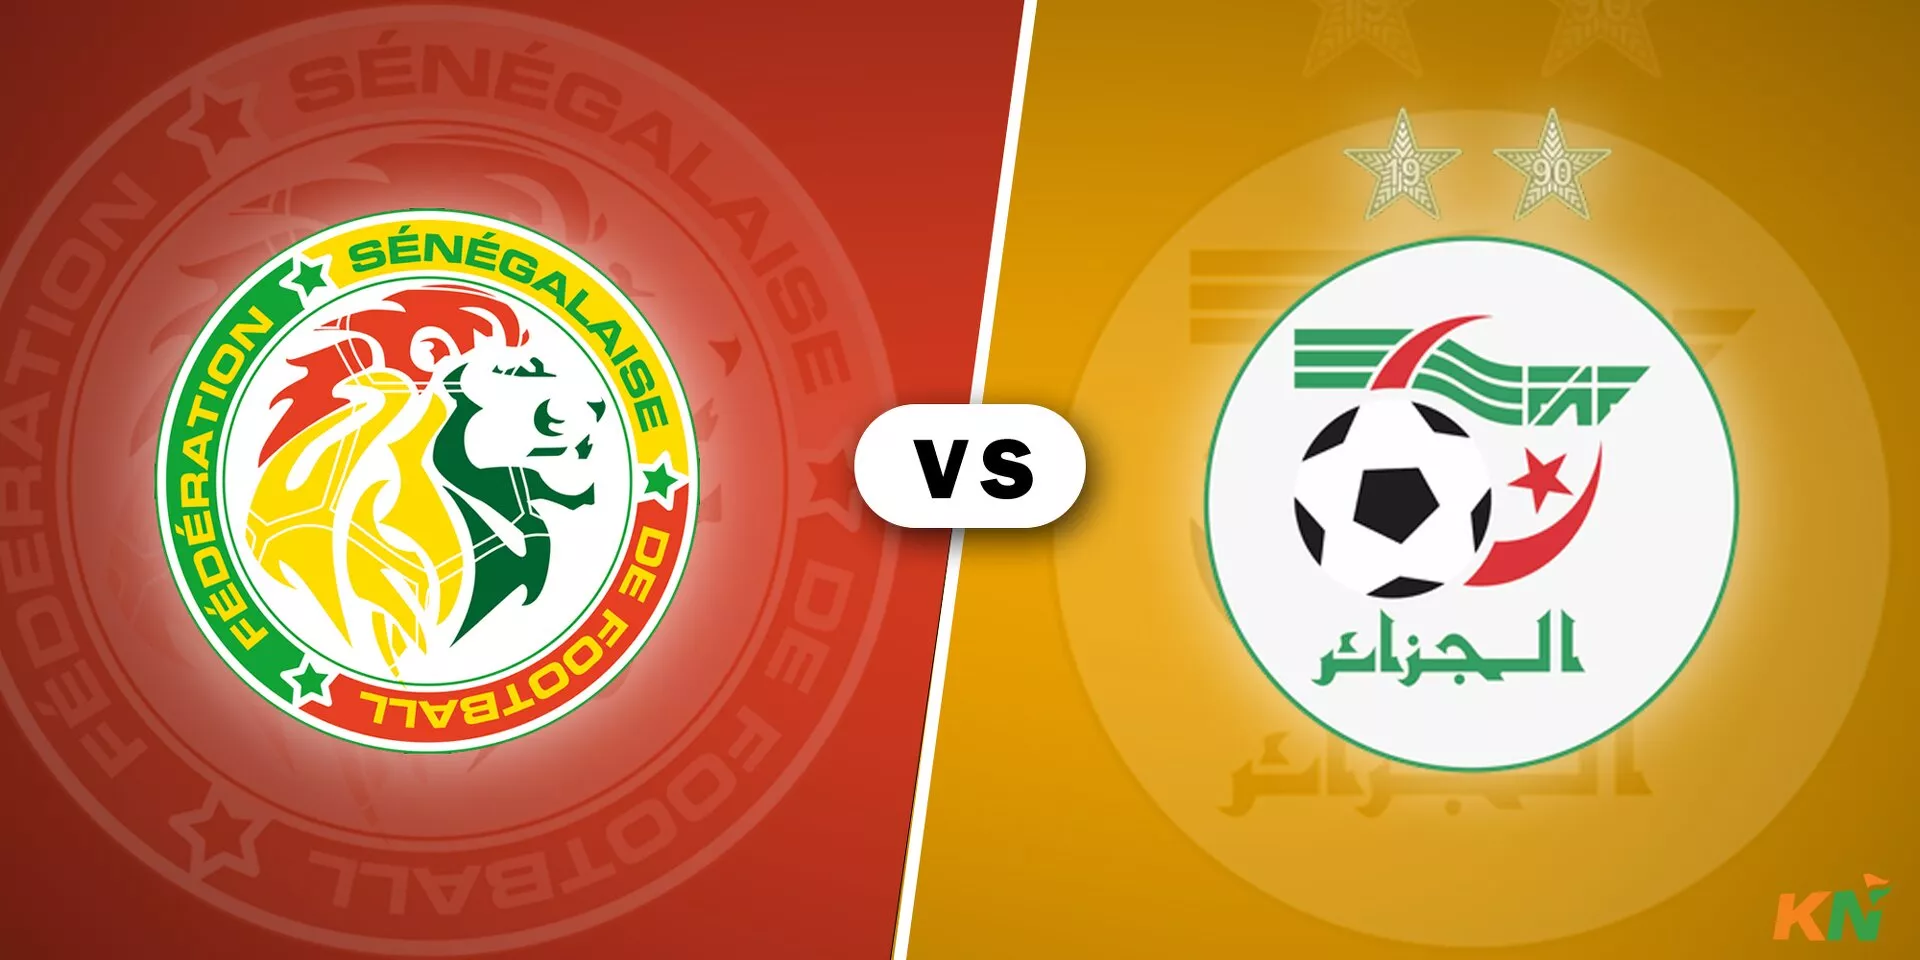 Senegal vs Algeria: Predicted lineup, team news, head-to-head, telecast